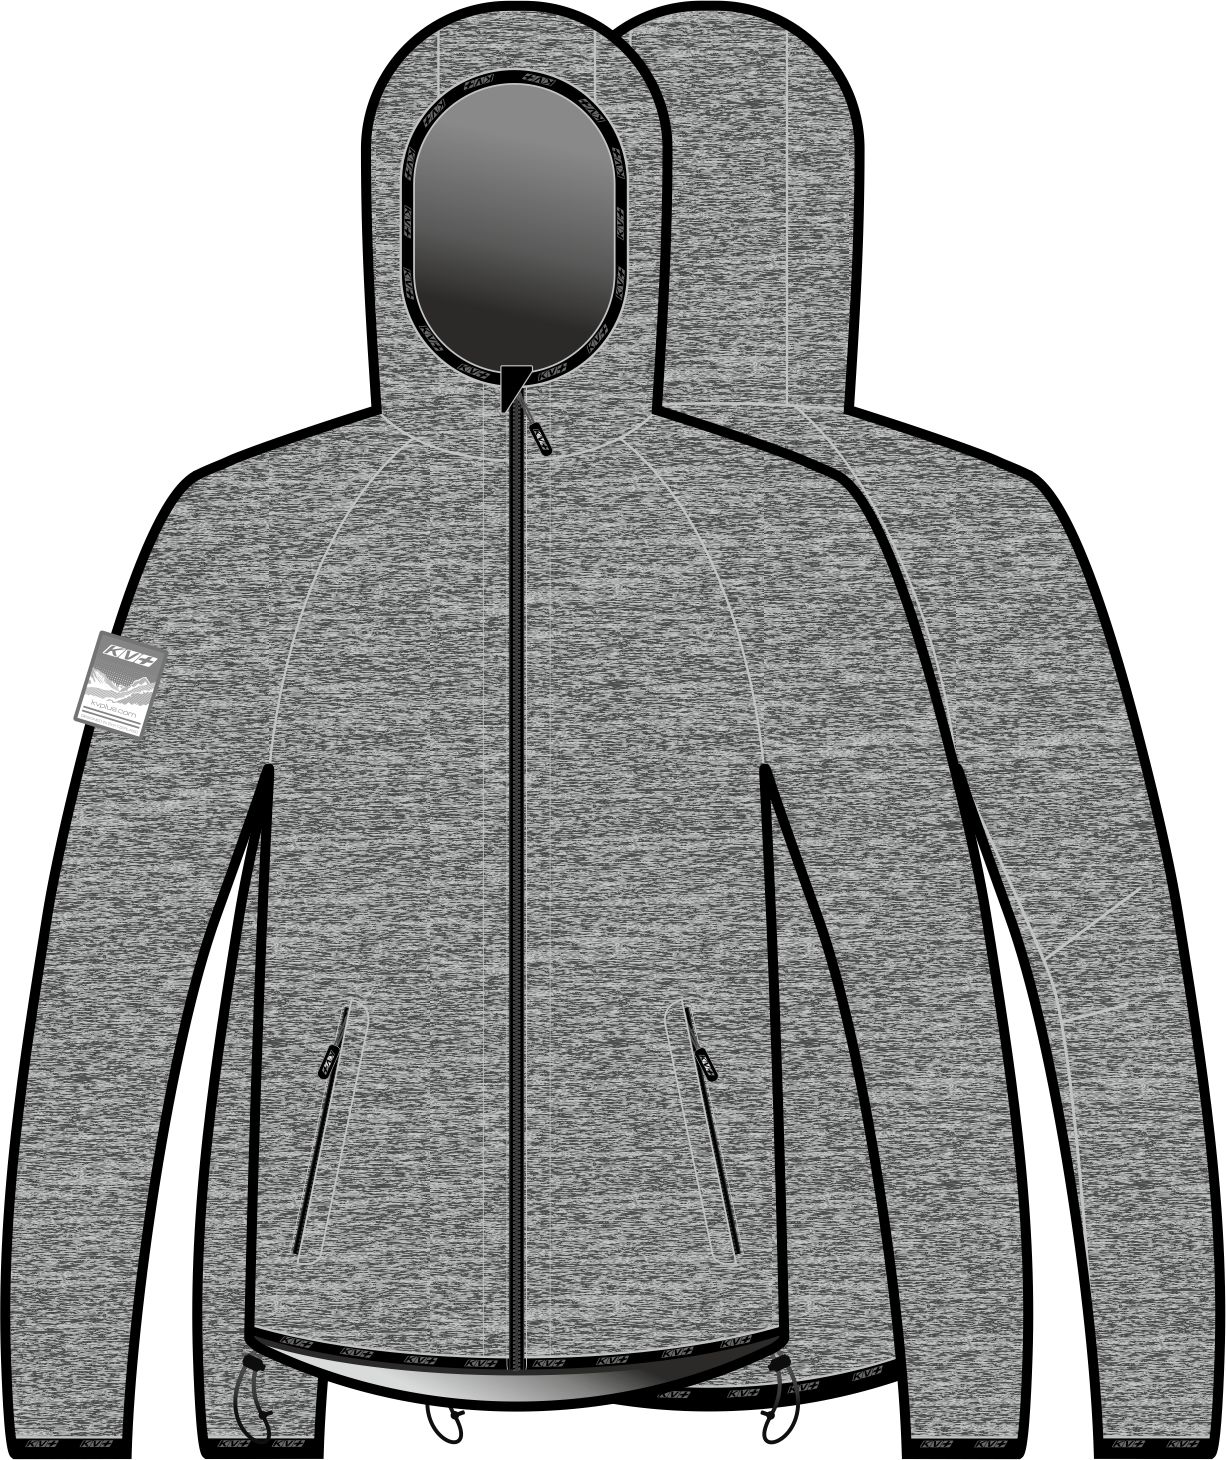 JERSEY FOCA man with hood (gray/black)